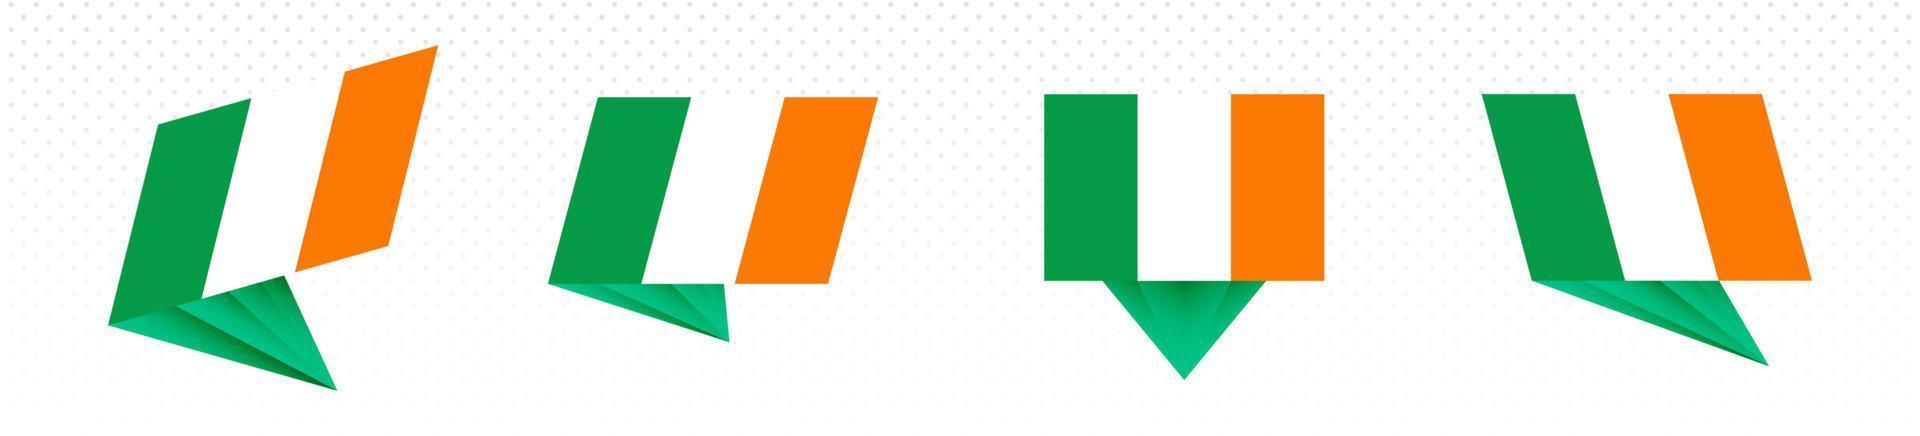 Flag of Ireland in modern abstract design, flag set. vector